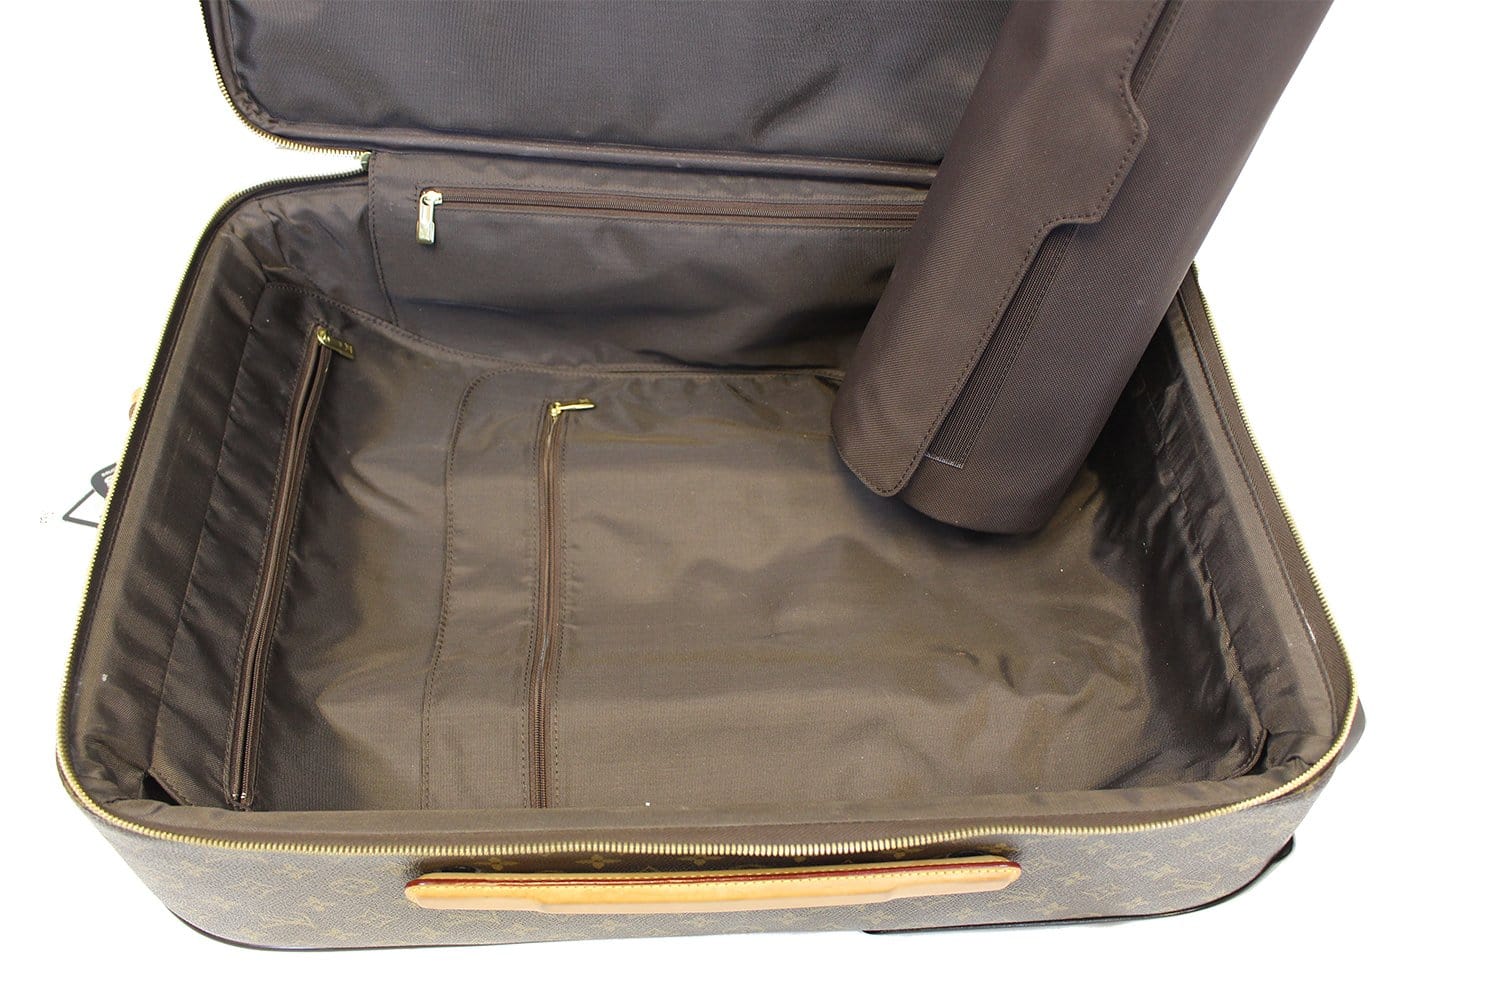 Hermes luggage 👌🏻  Bags, Luxury luggage, Travel chic